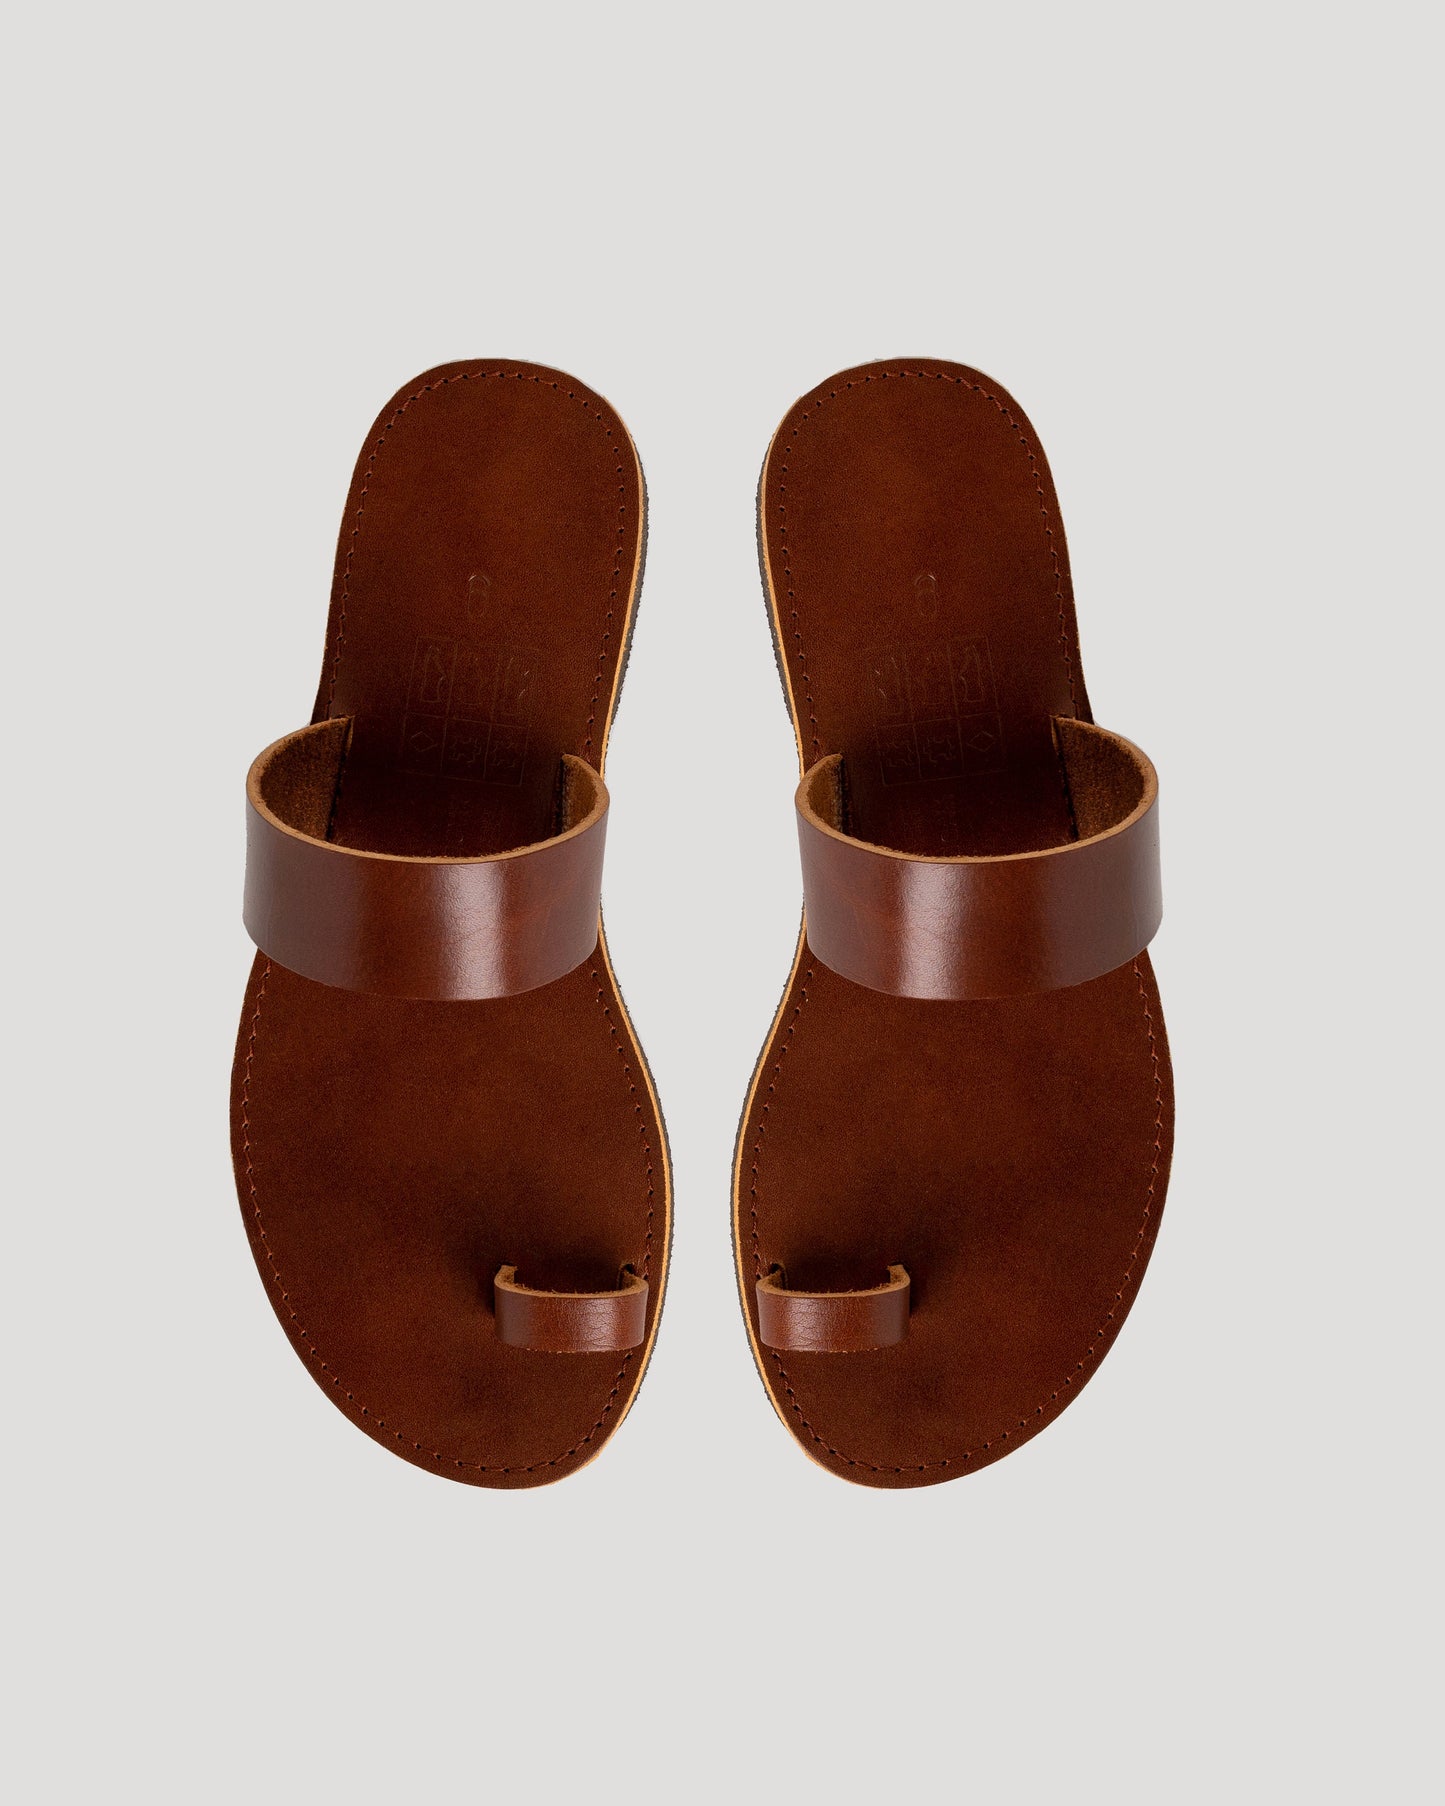 Womens toe ring leather sandals, Greek leather sandals flats, Summer leather shoes, Griechische Leder Sandalen